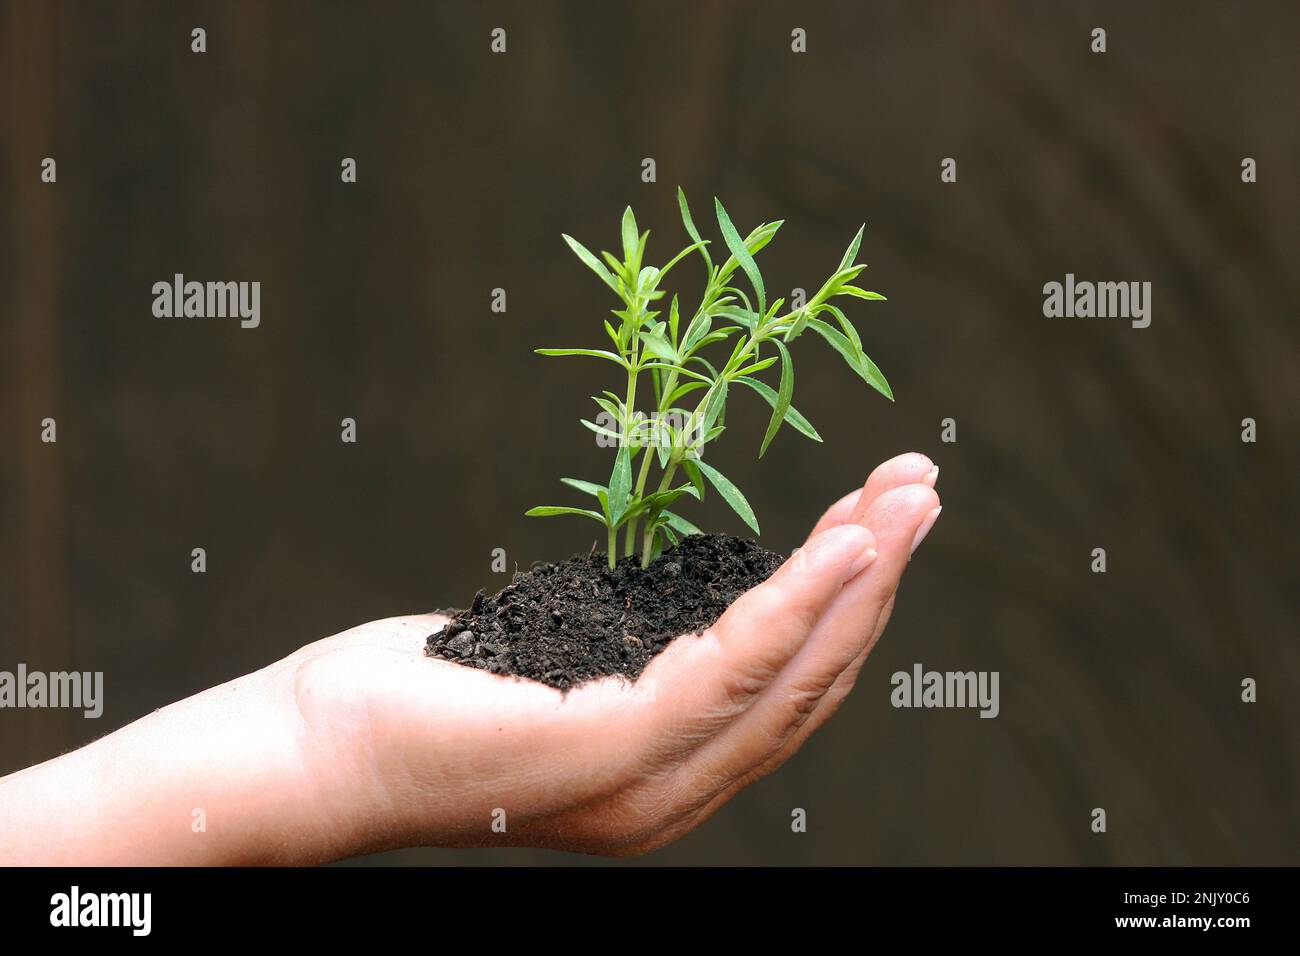 dragon sagewort, tarragon, estragole, esdragol, esdragon (Artemisia dracunculus), twigs of tarragon in soil in a hand Stock Photo